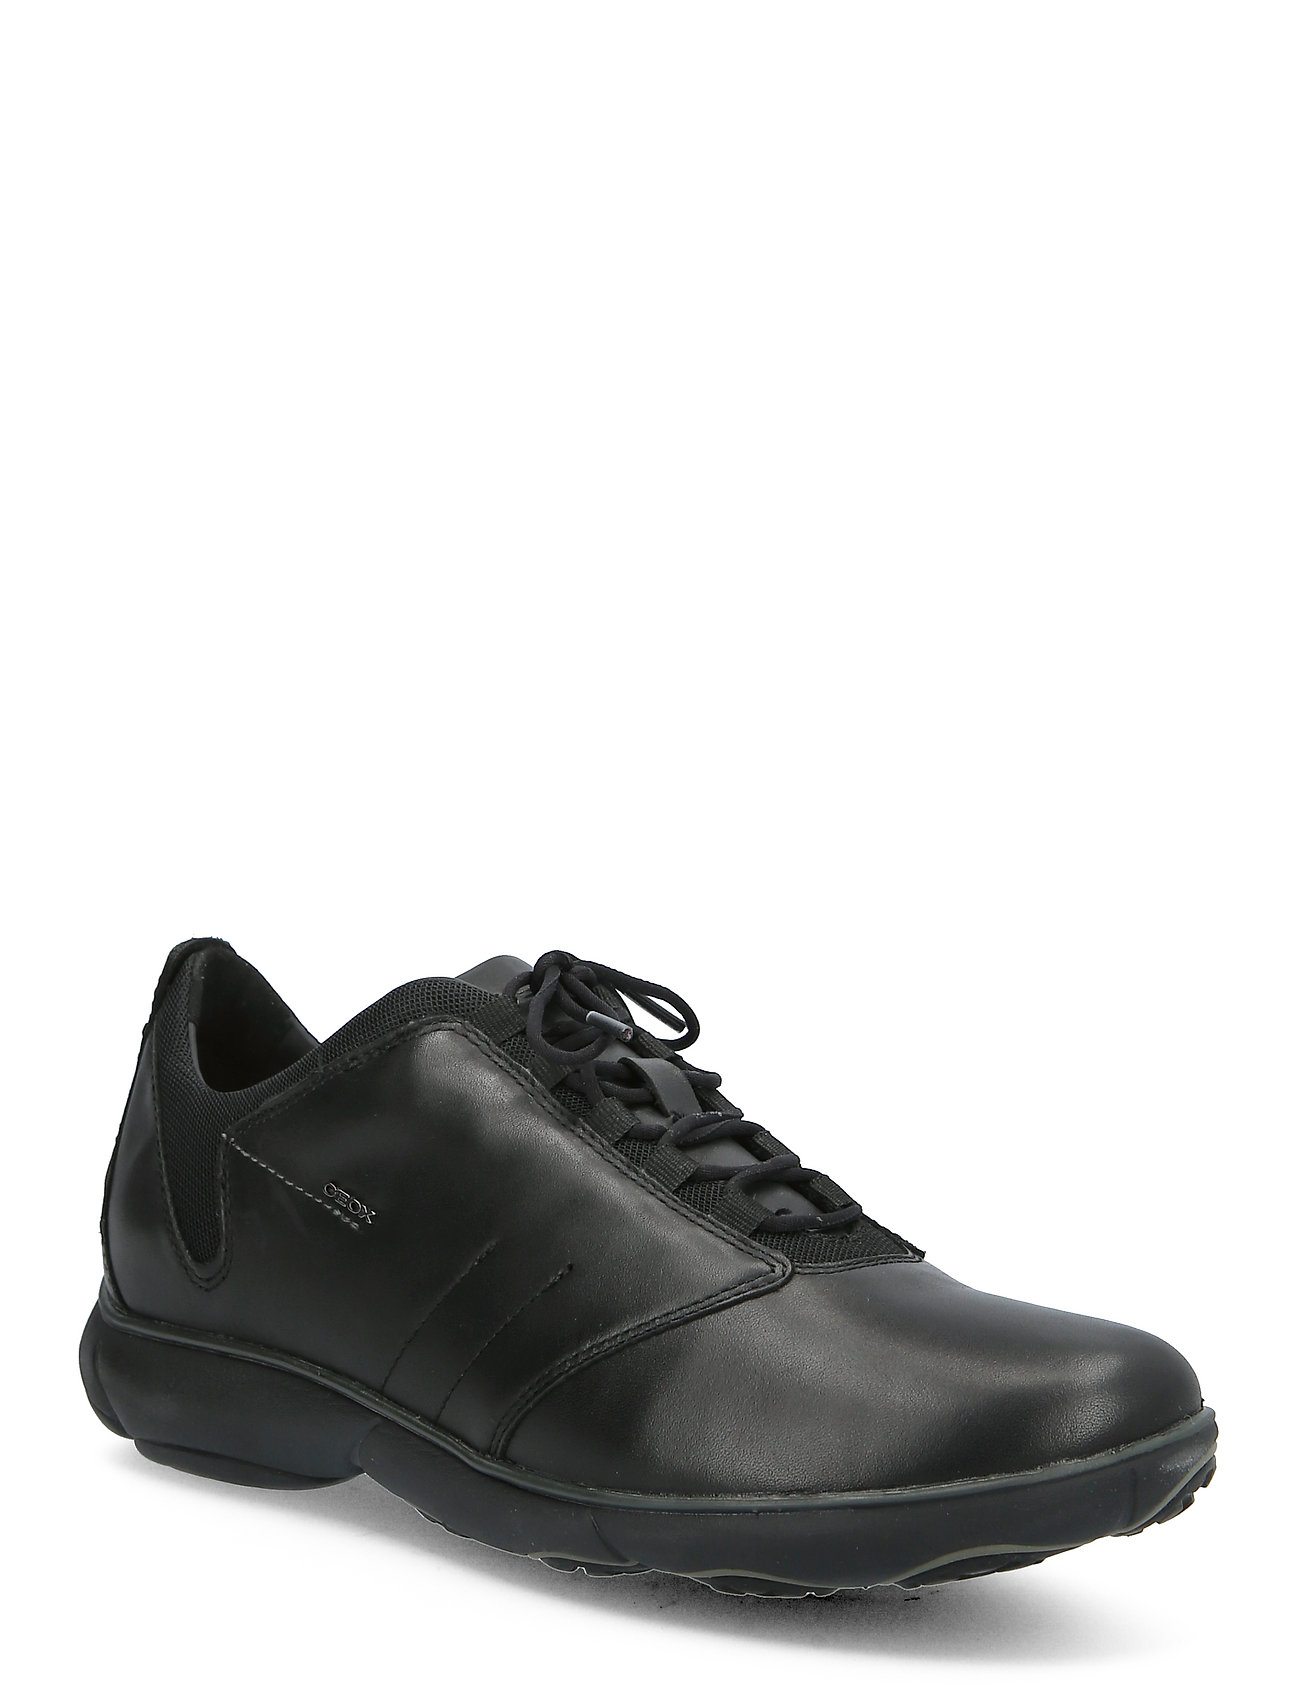 GEOX Nebula A sneakers sale u52d7a tumb leather black 